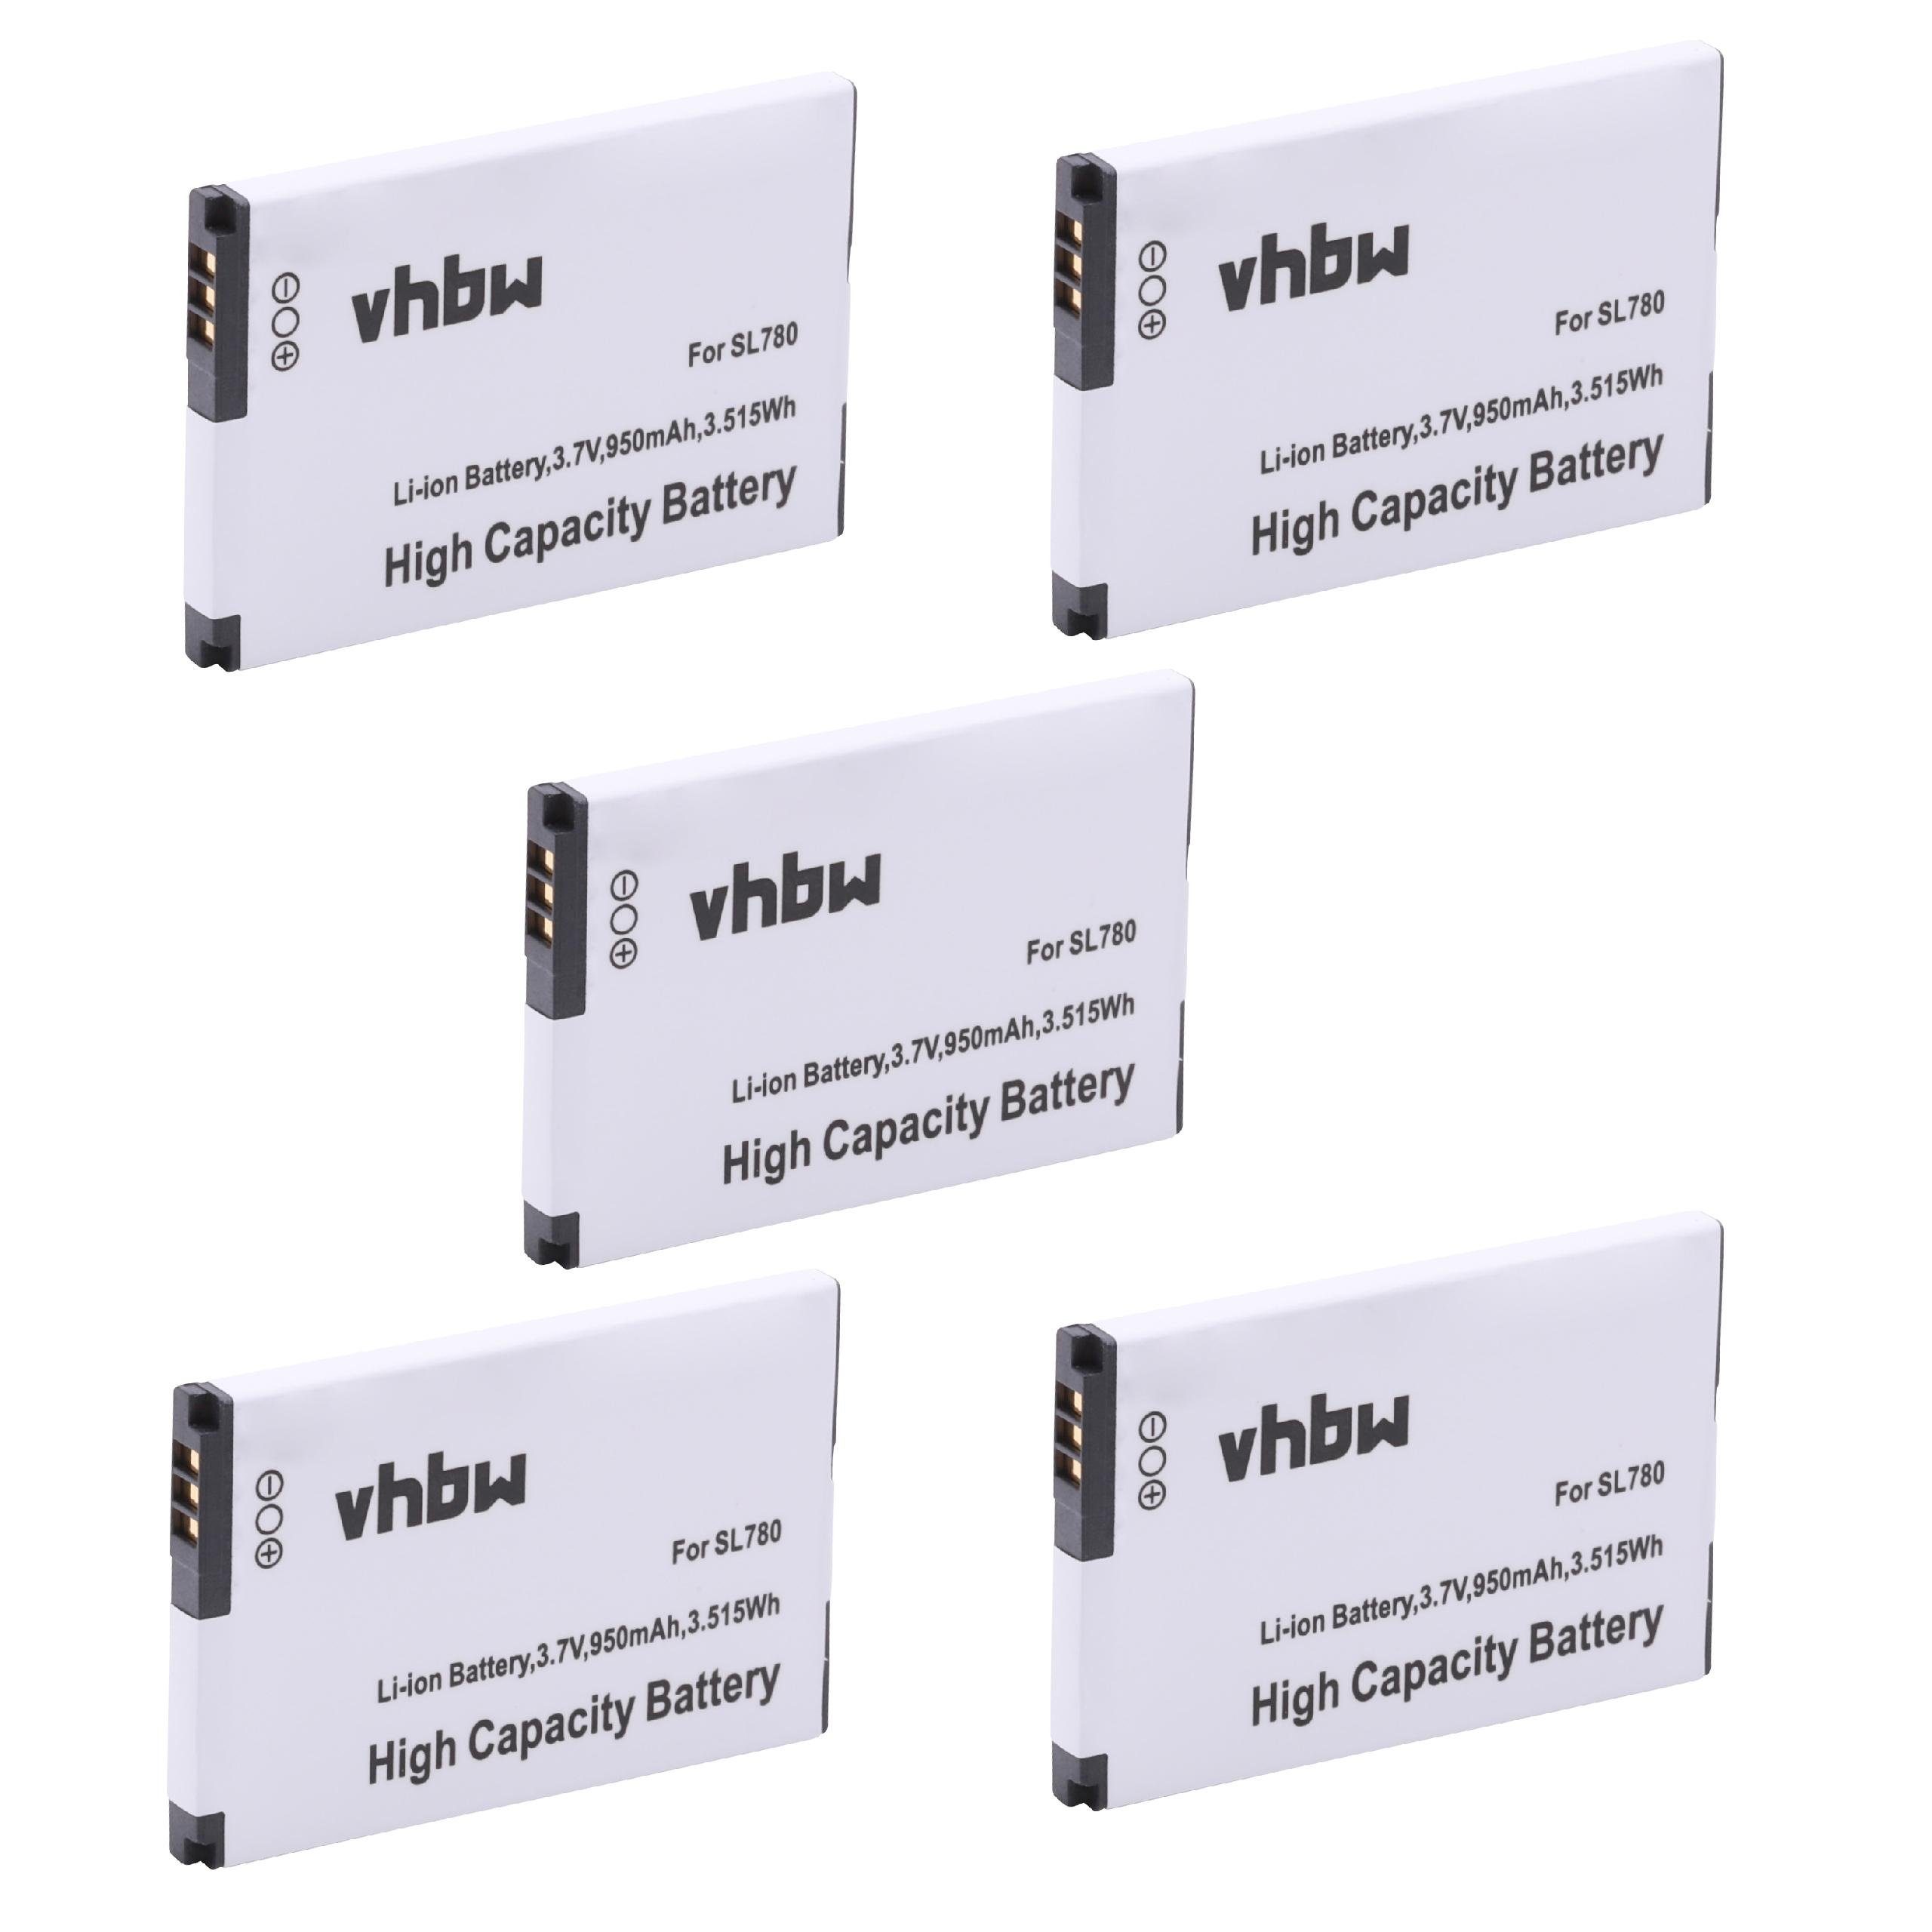 vhbw kompatibel mit Gigaset Akku (3,7 mAh Premium 300HX Li-Ion V) 950